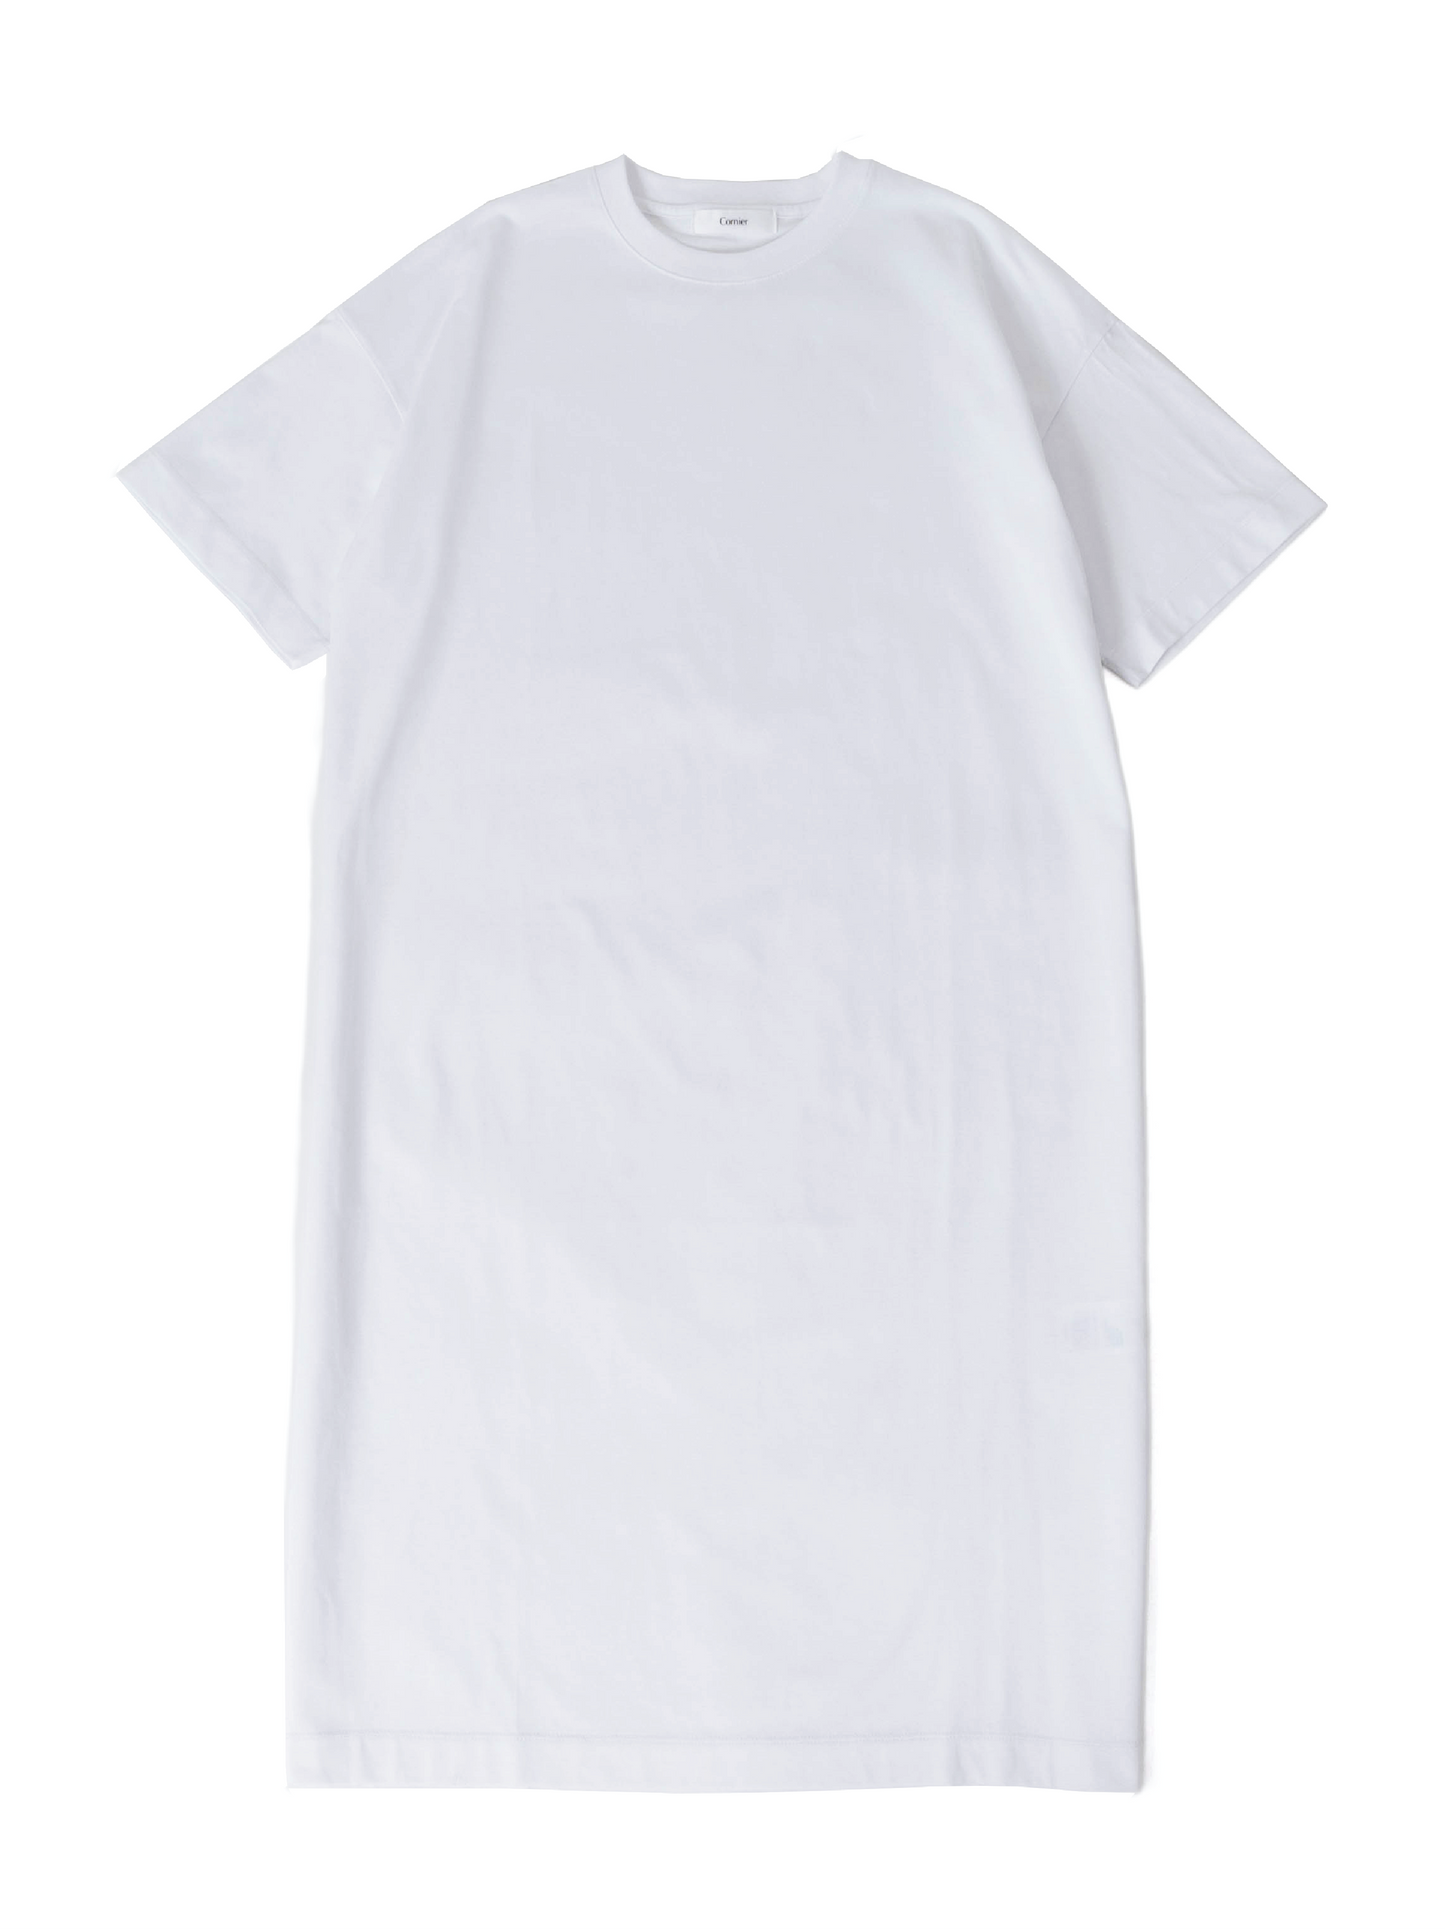 SUPER HIGH GAUGE HALF SLEEVE DRESS-T (White Gray)